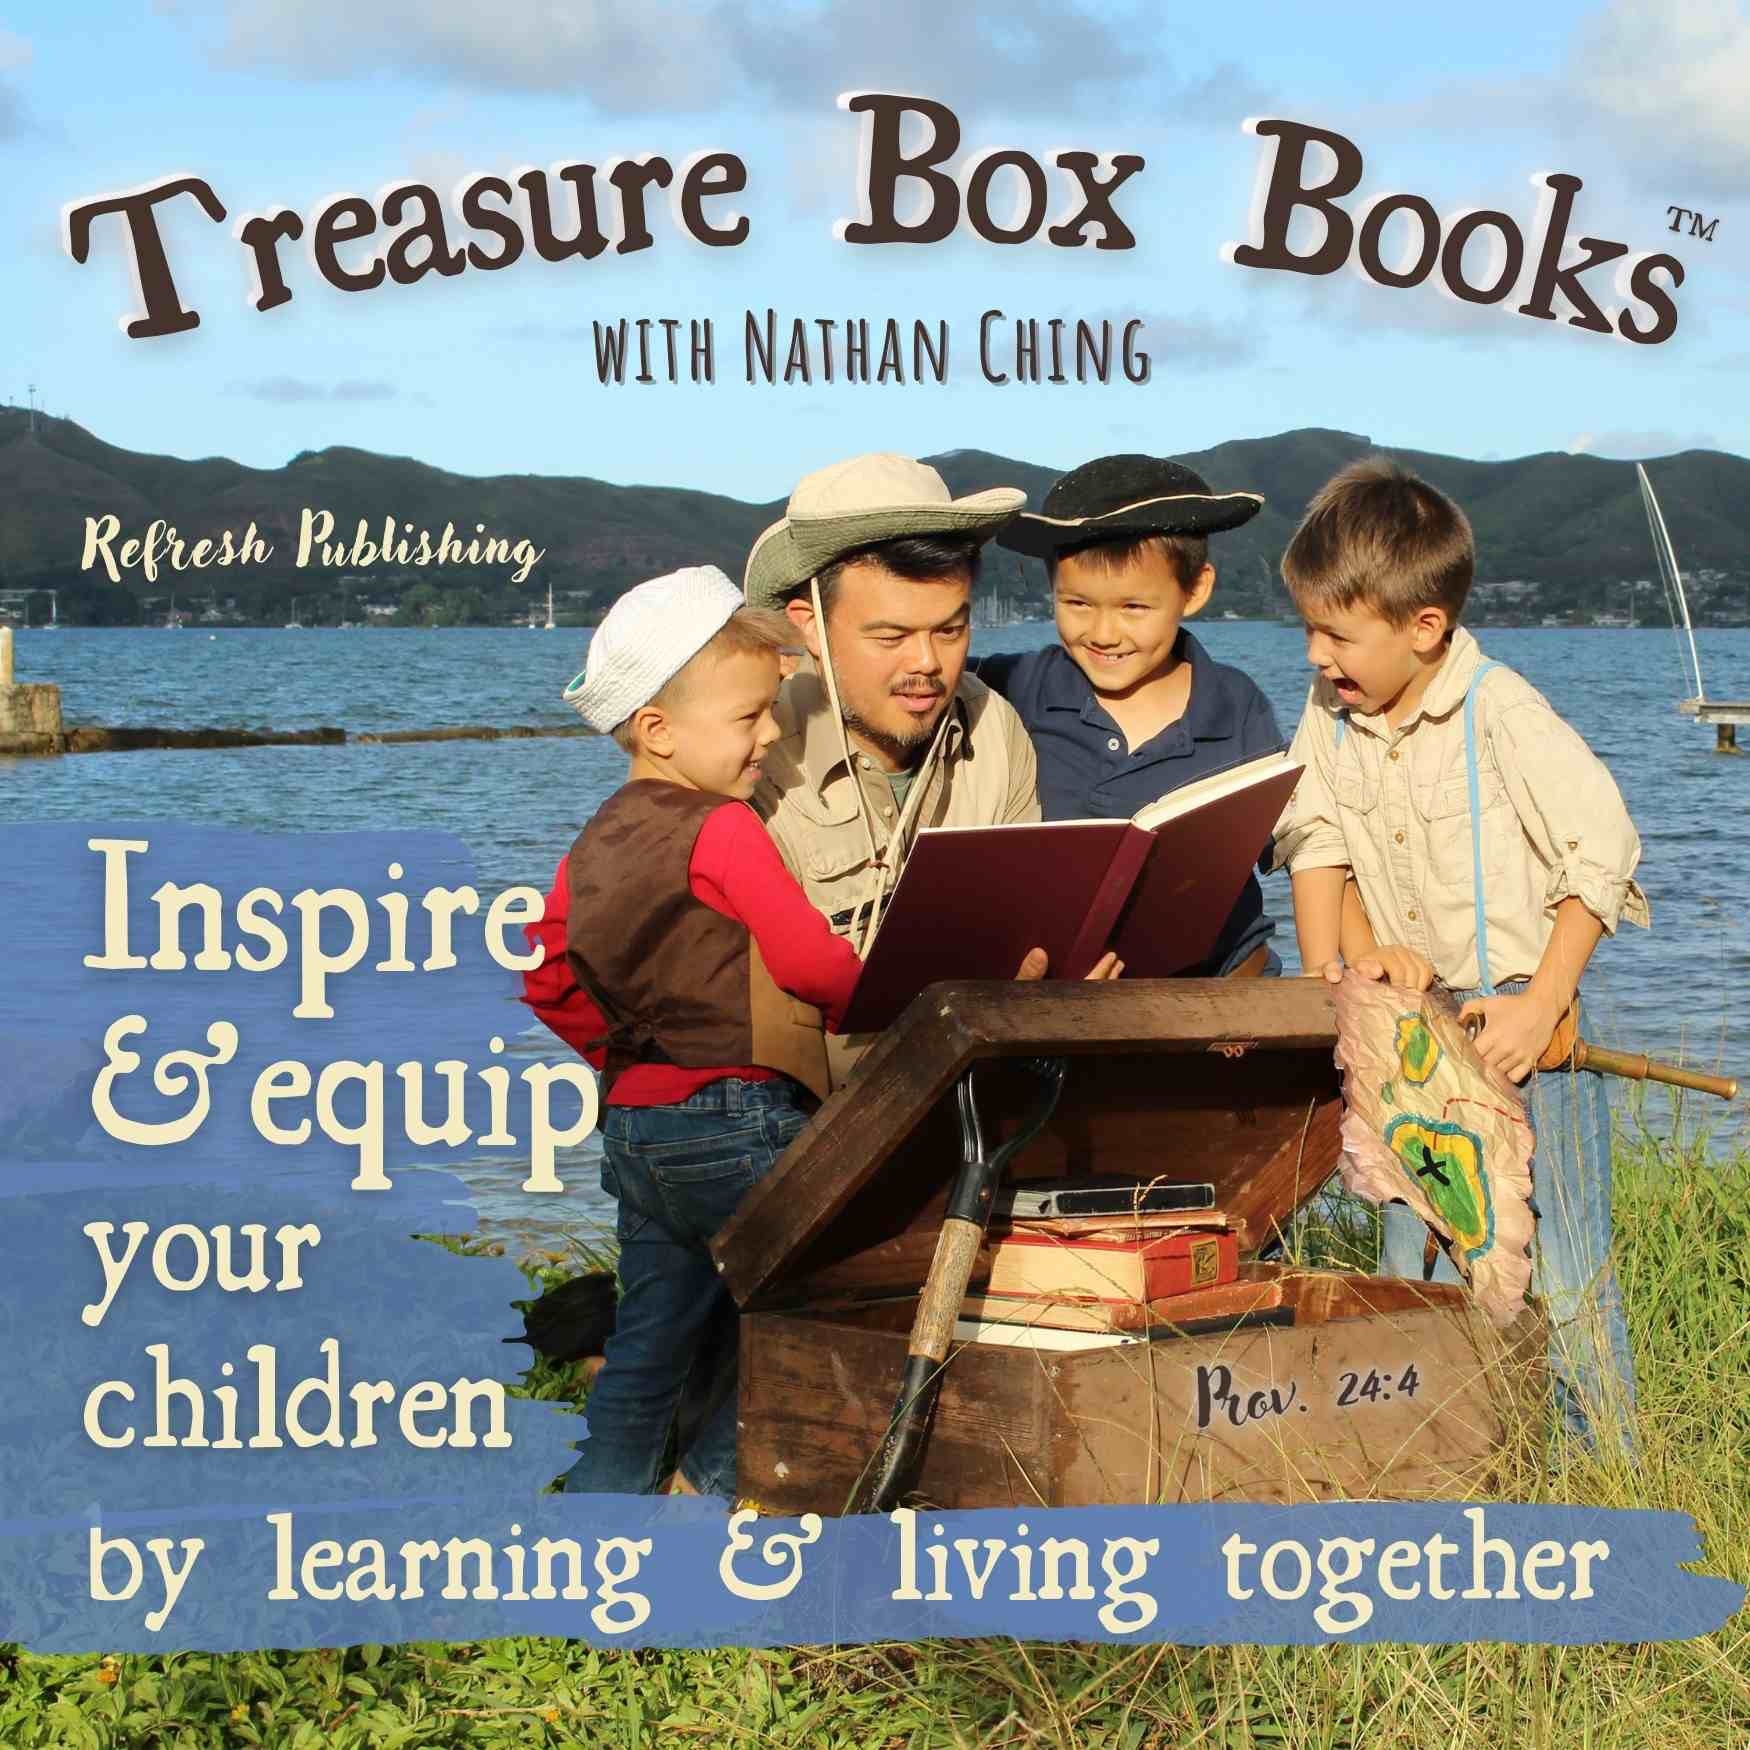 Treasure Box Books | Dads Building Relationships, Reading Great Books, Preparing Children for Life